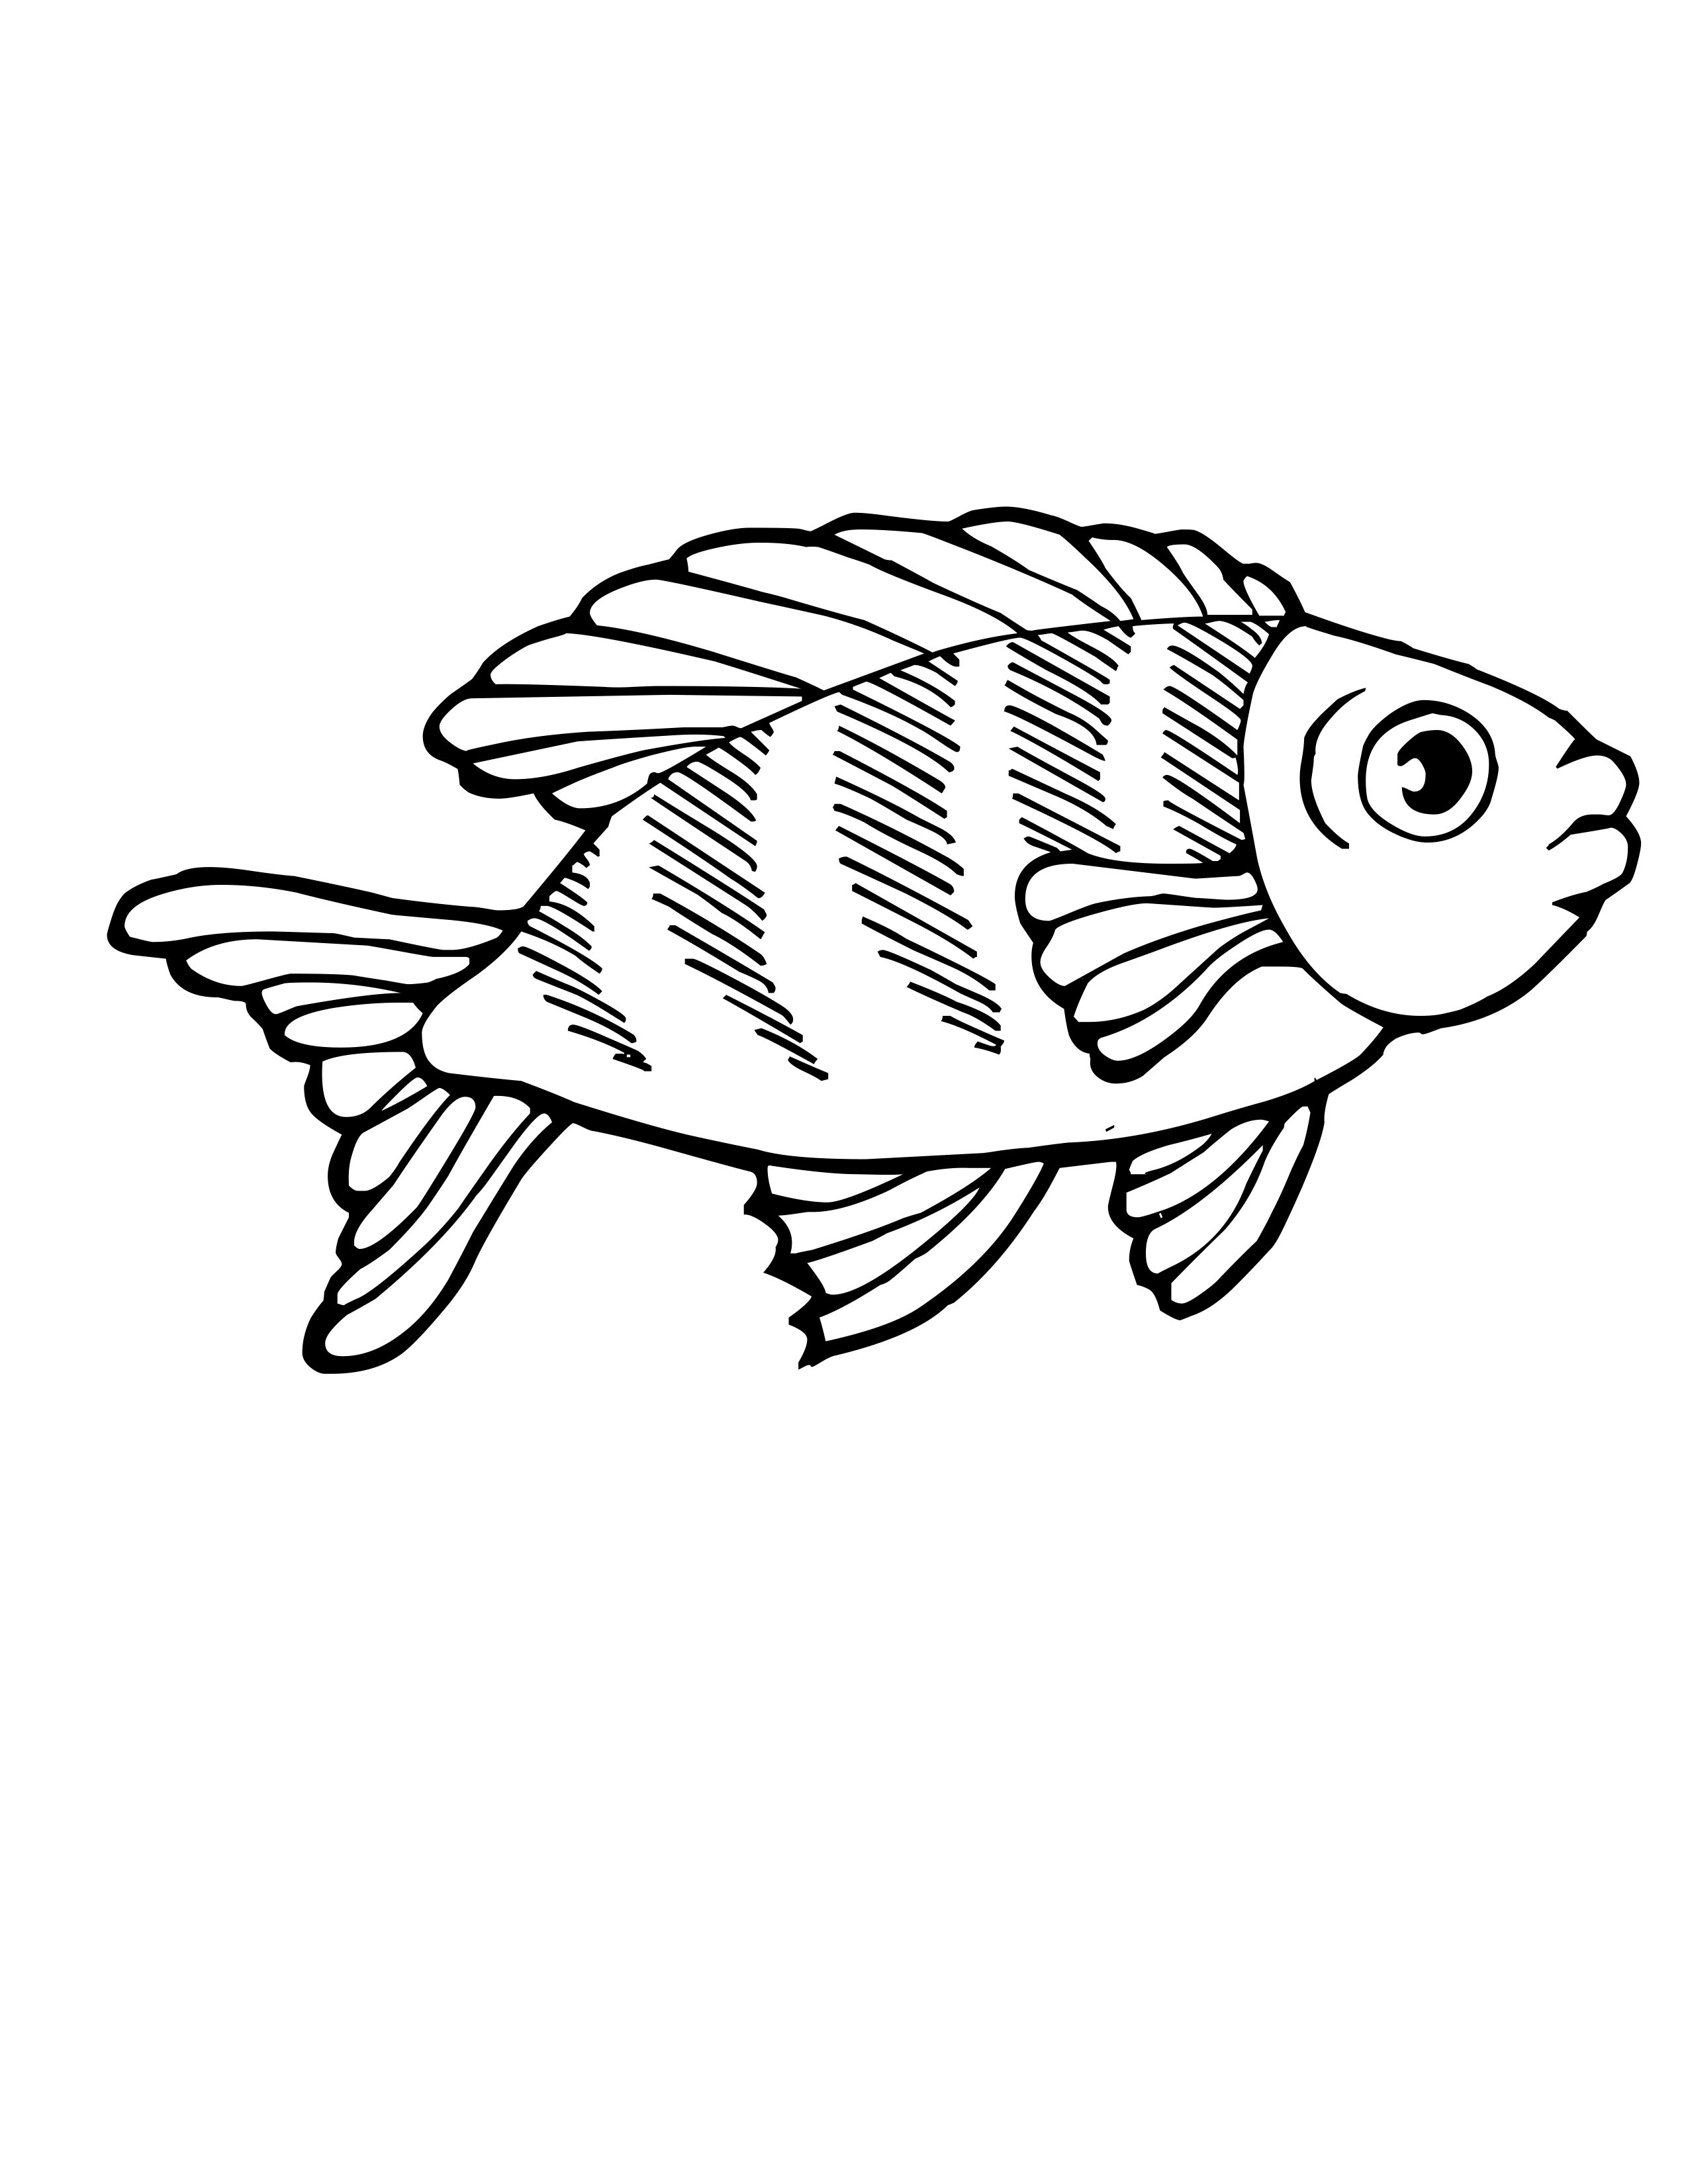 Free Koi Fish Coloring Page, Download Free Koi Fish Coloring Page png